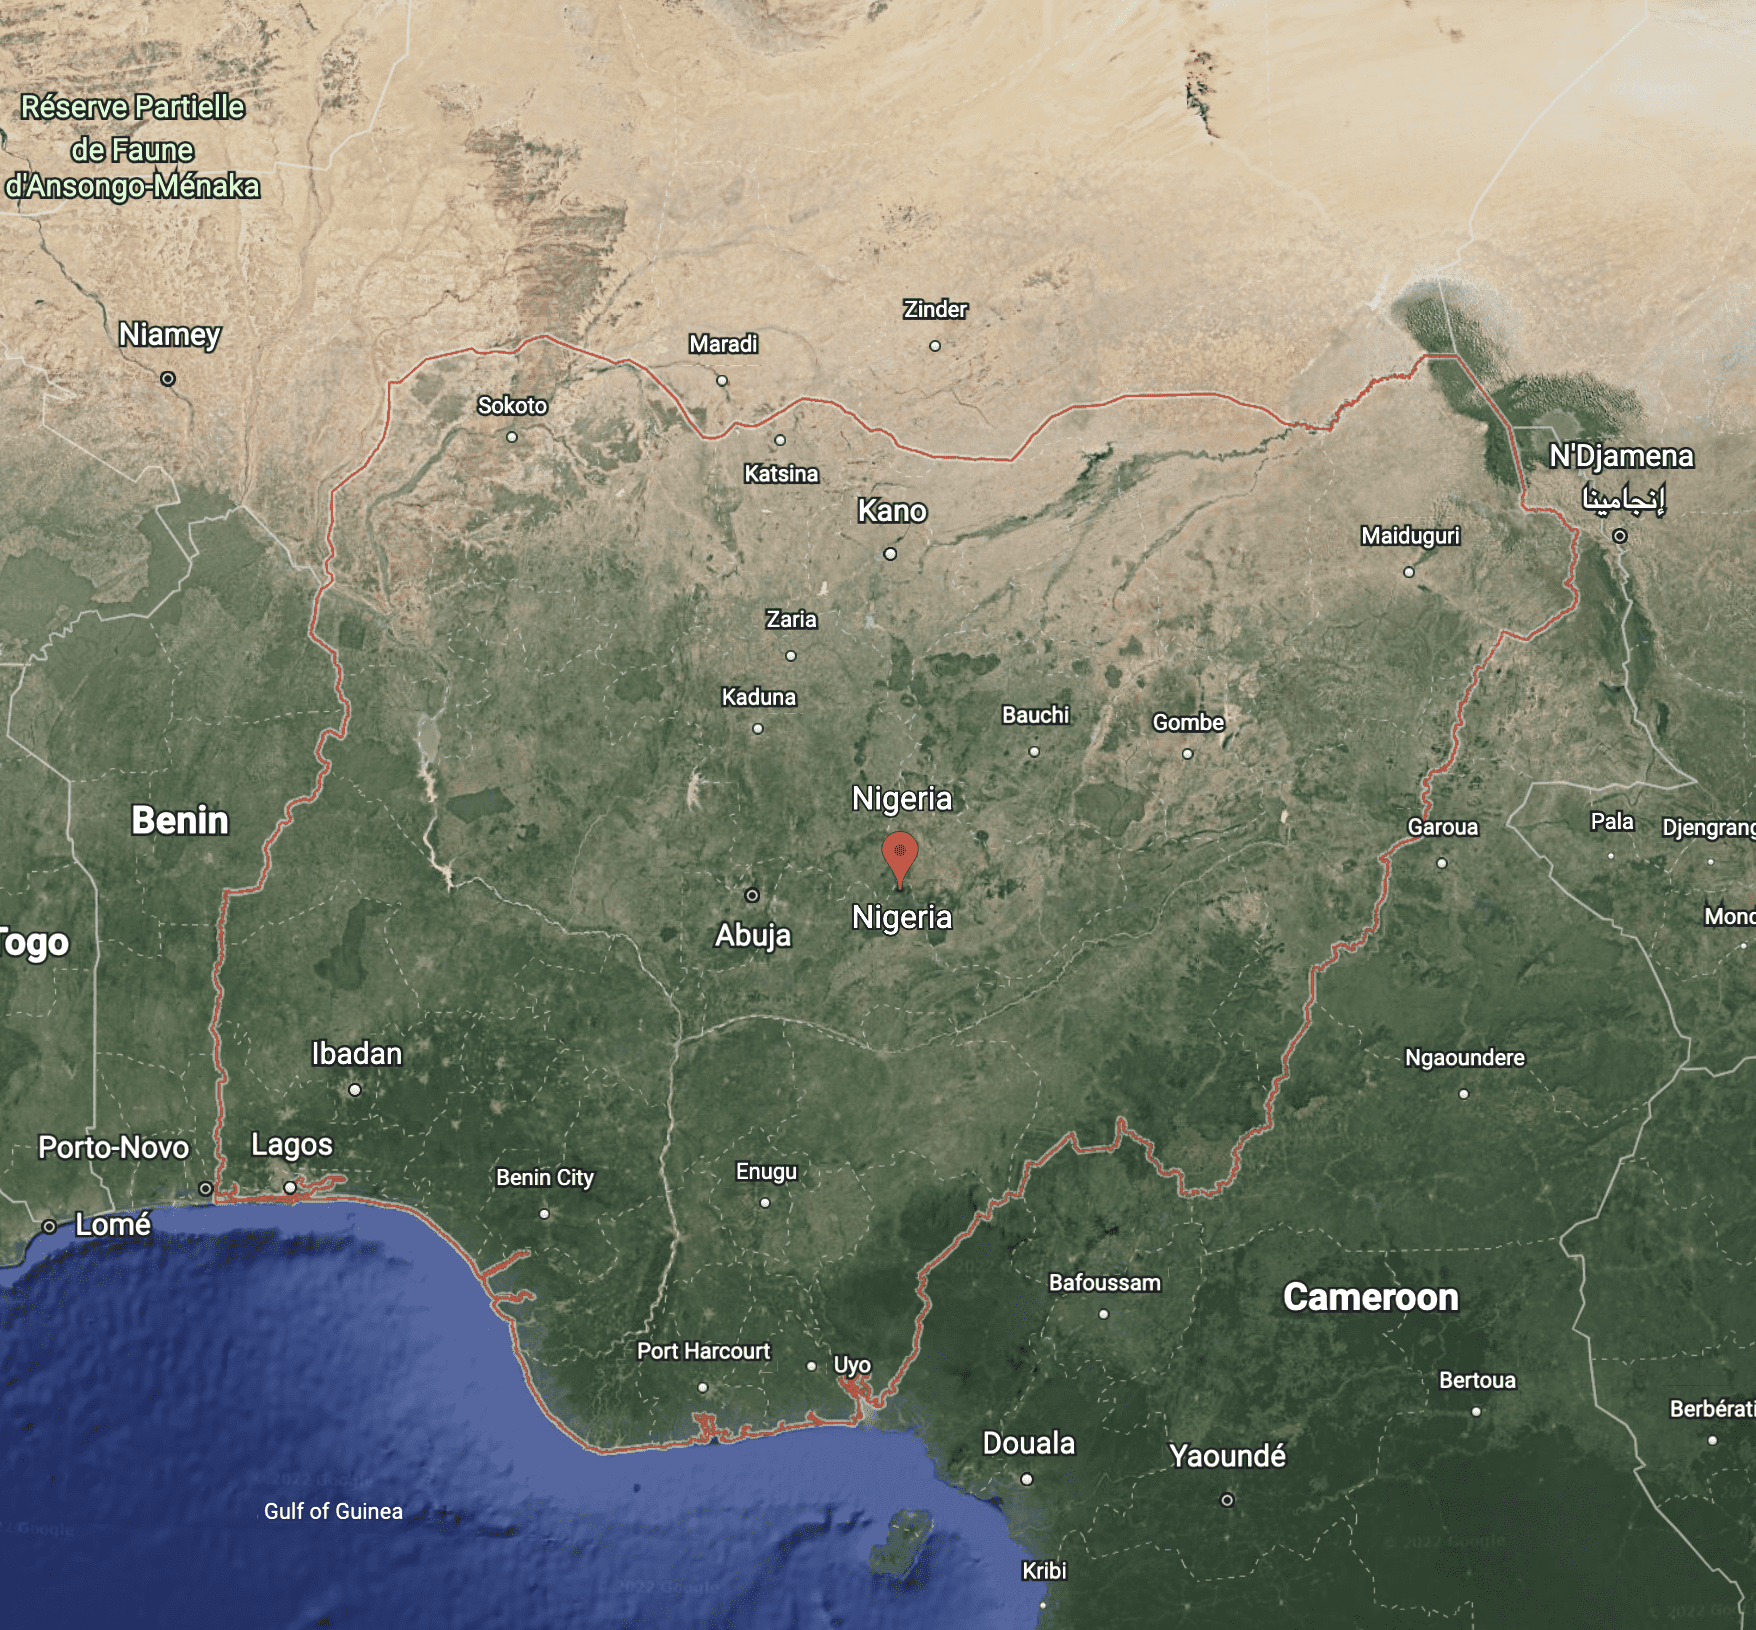 Google Earth Satellite Image of Nigeria